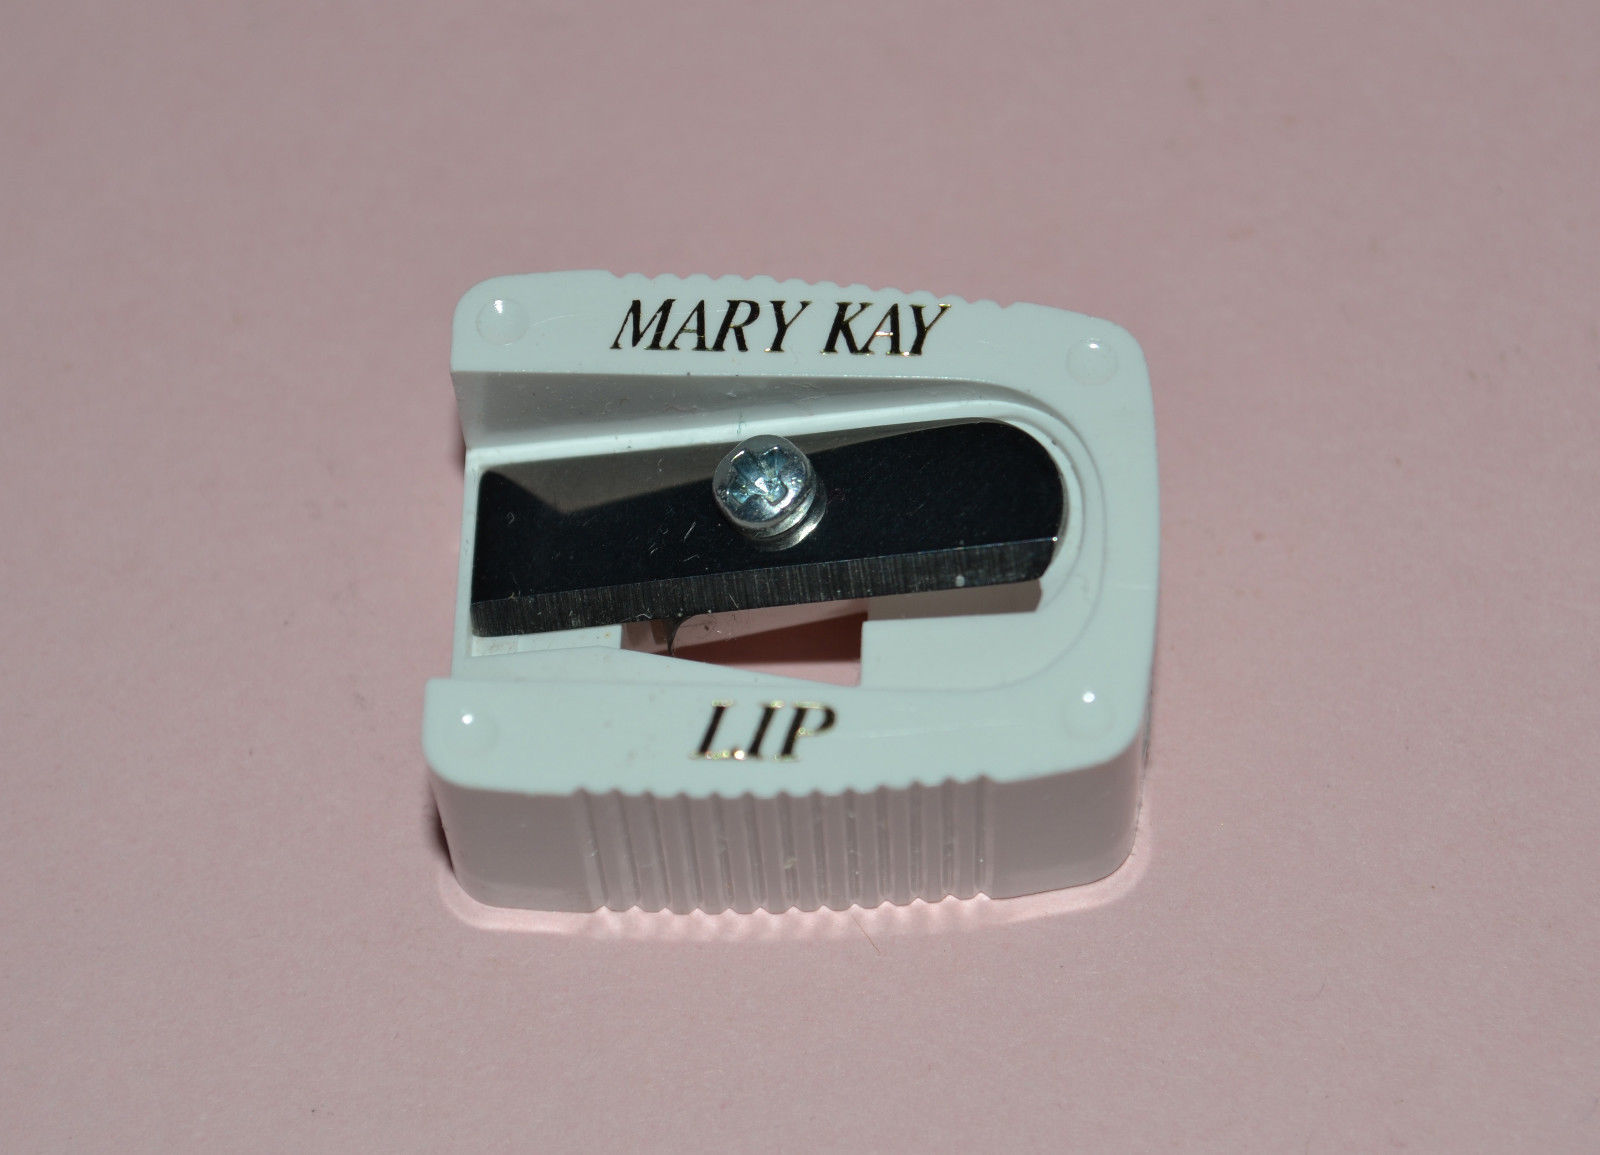 1 MARY KAY LIP LINER PENCIL SHARPENER (WHITE) - $2.49